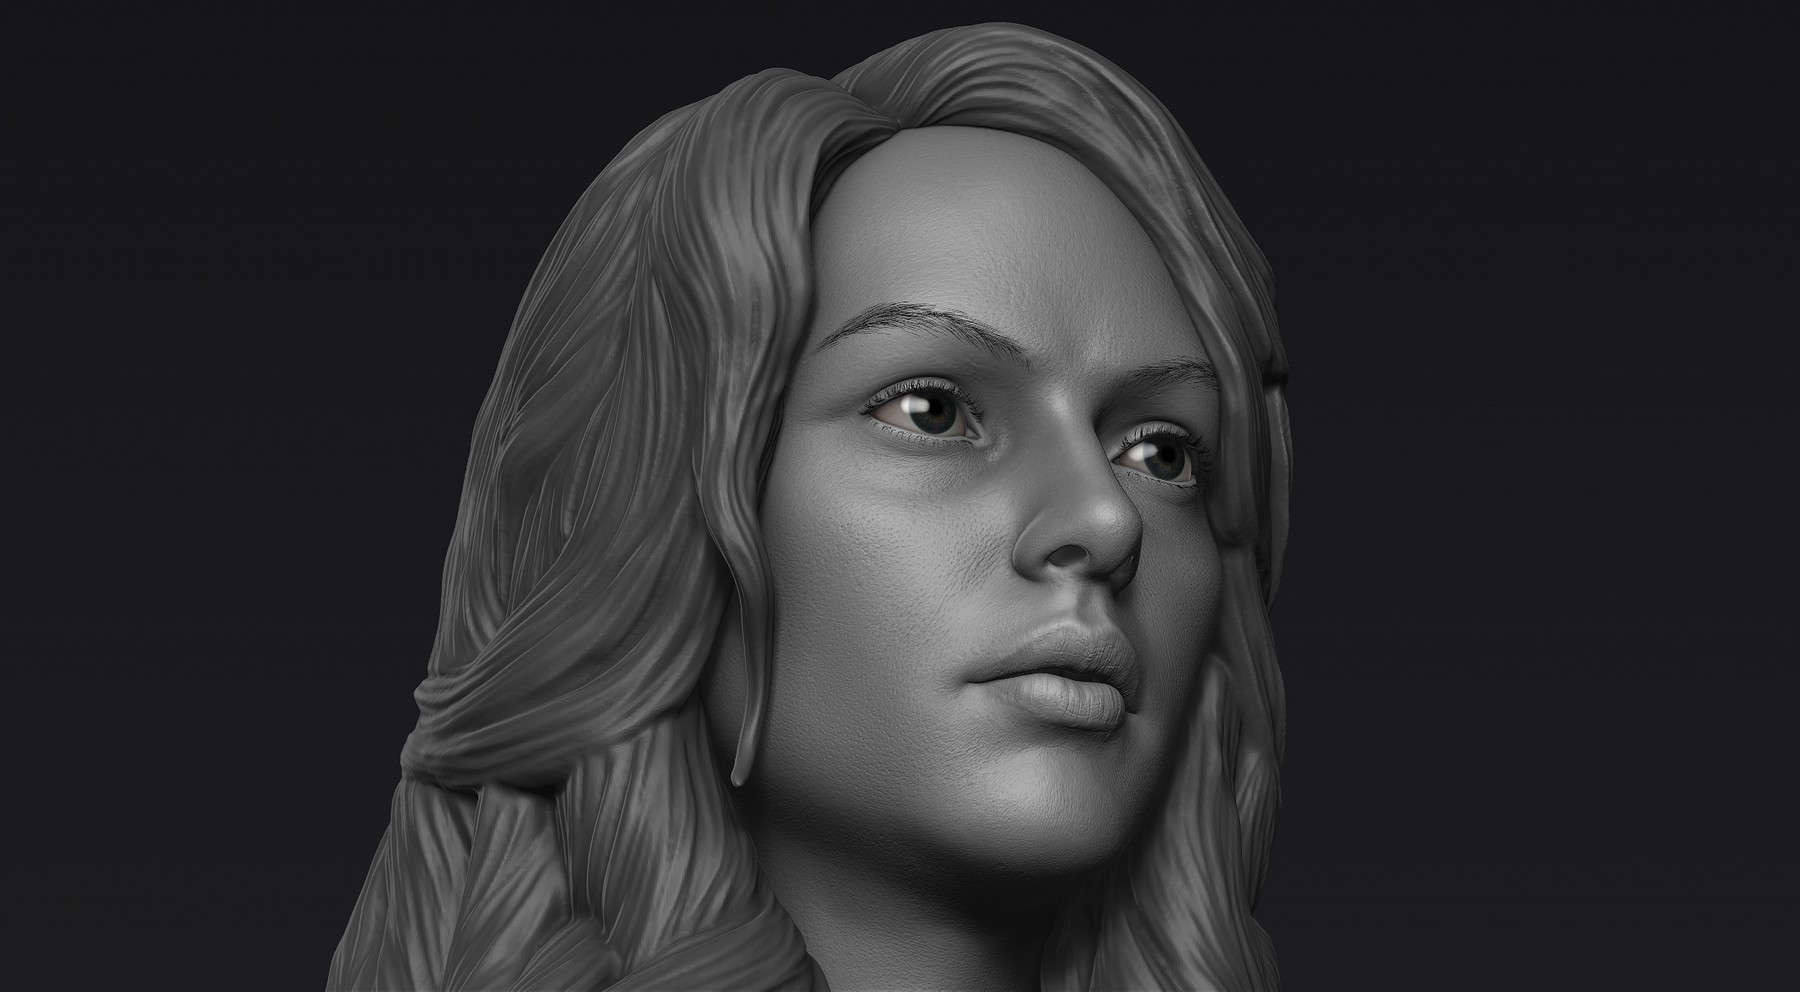 sculpting a realistic female face in zbrush